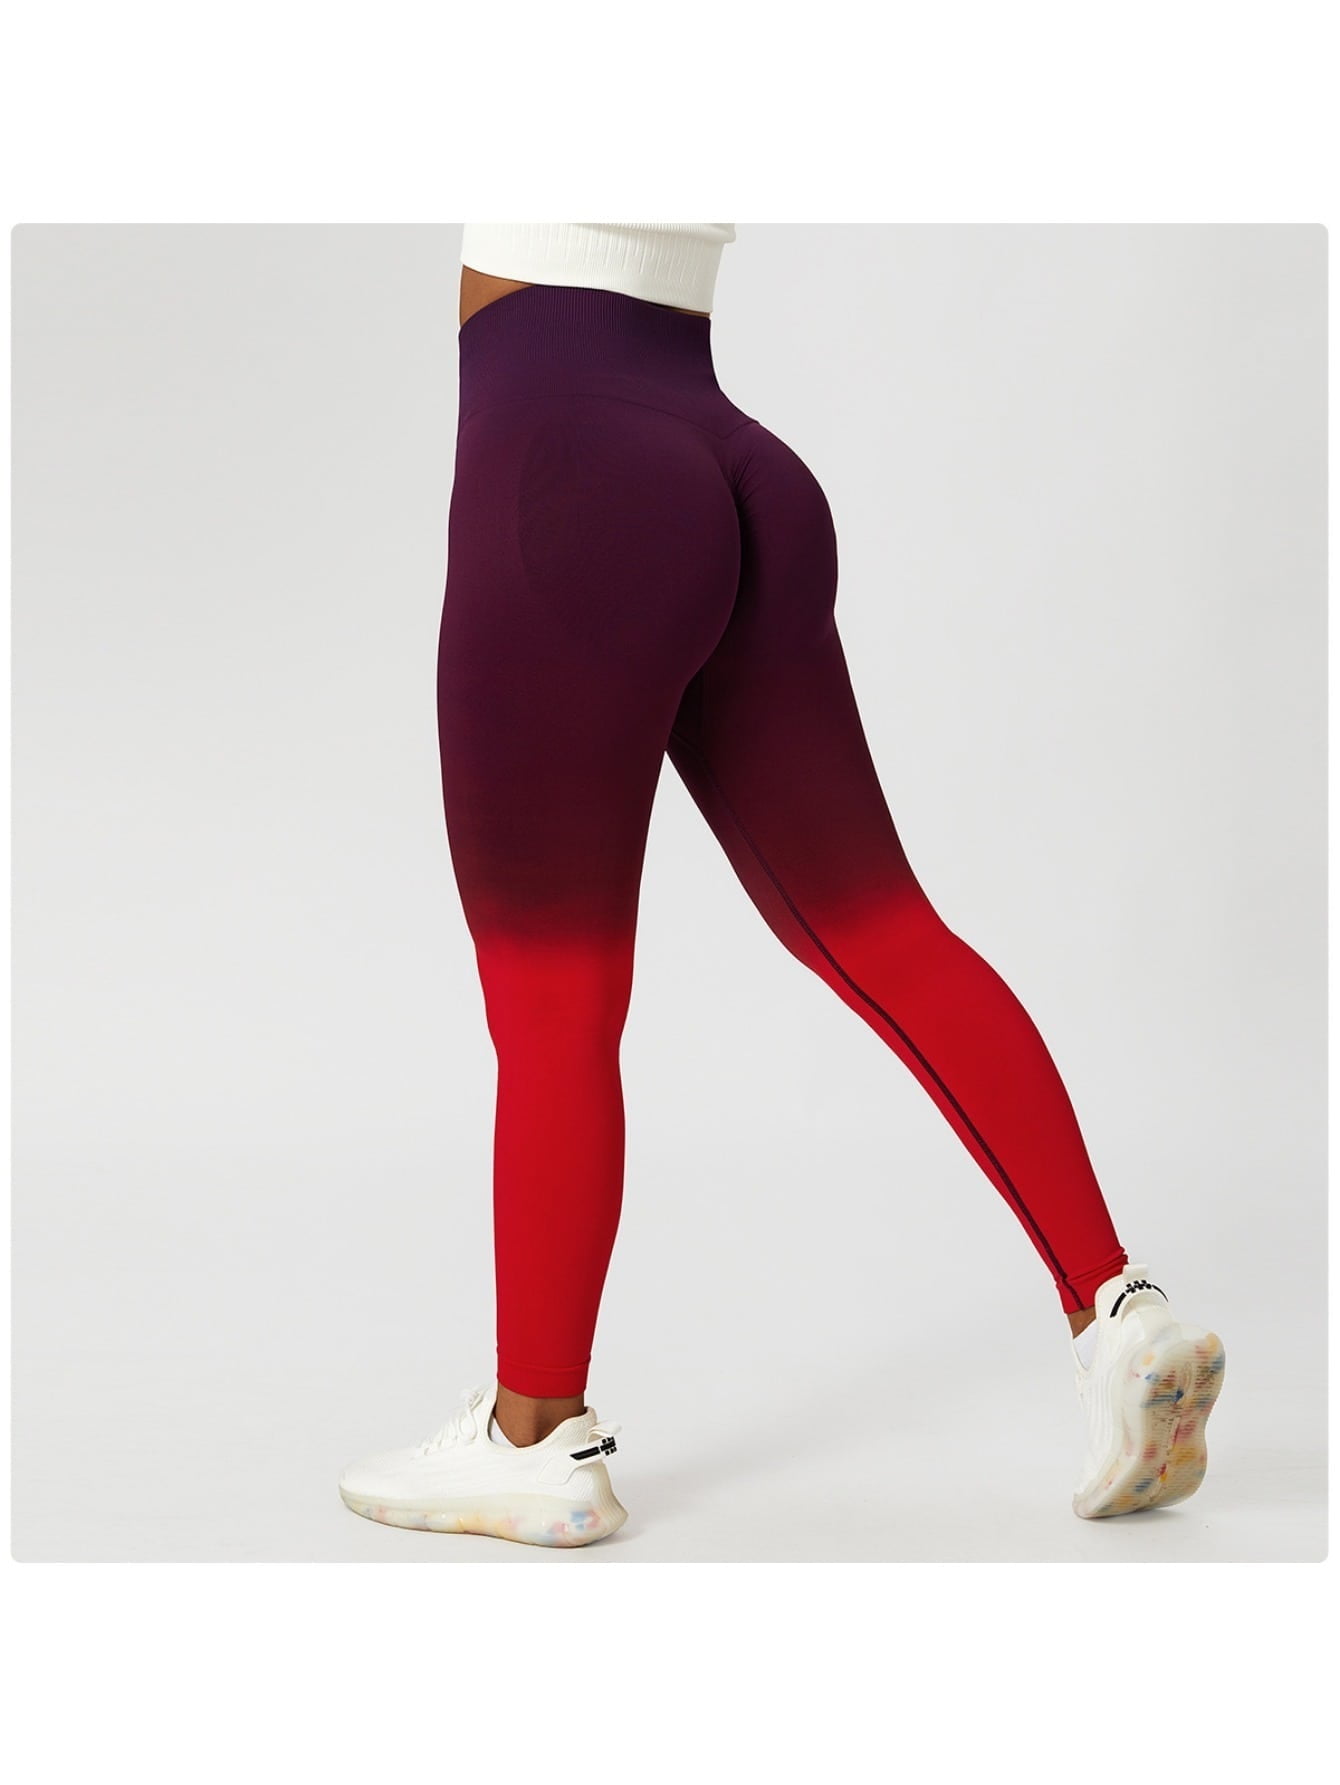 Seamless Scrunch Leggings Bright Cute Colors Yoga Pant Not Squat Proof  Casual Leggings for Women and Girls 